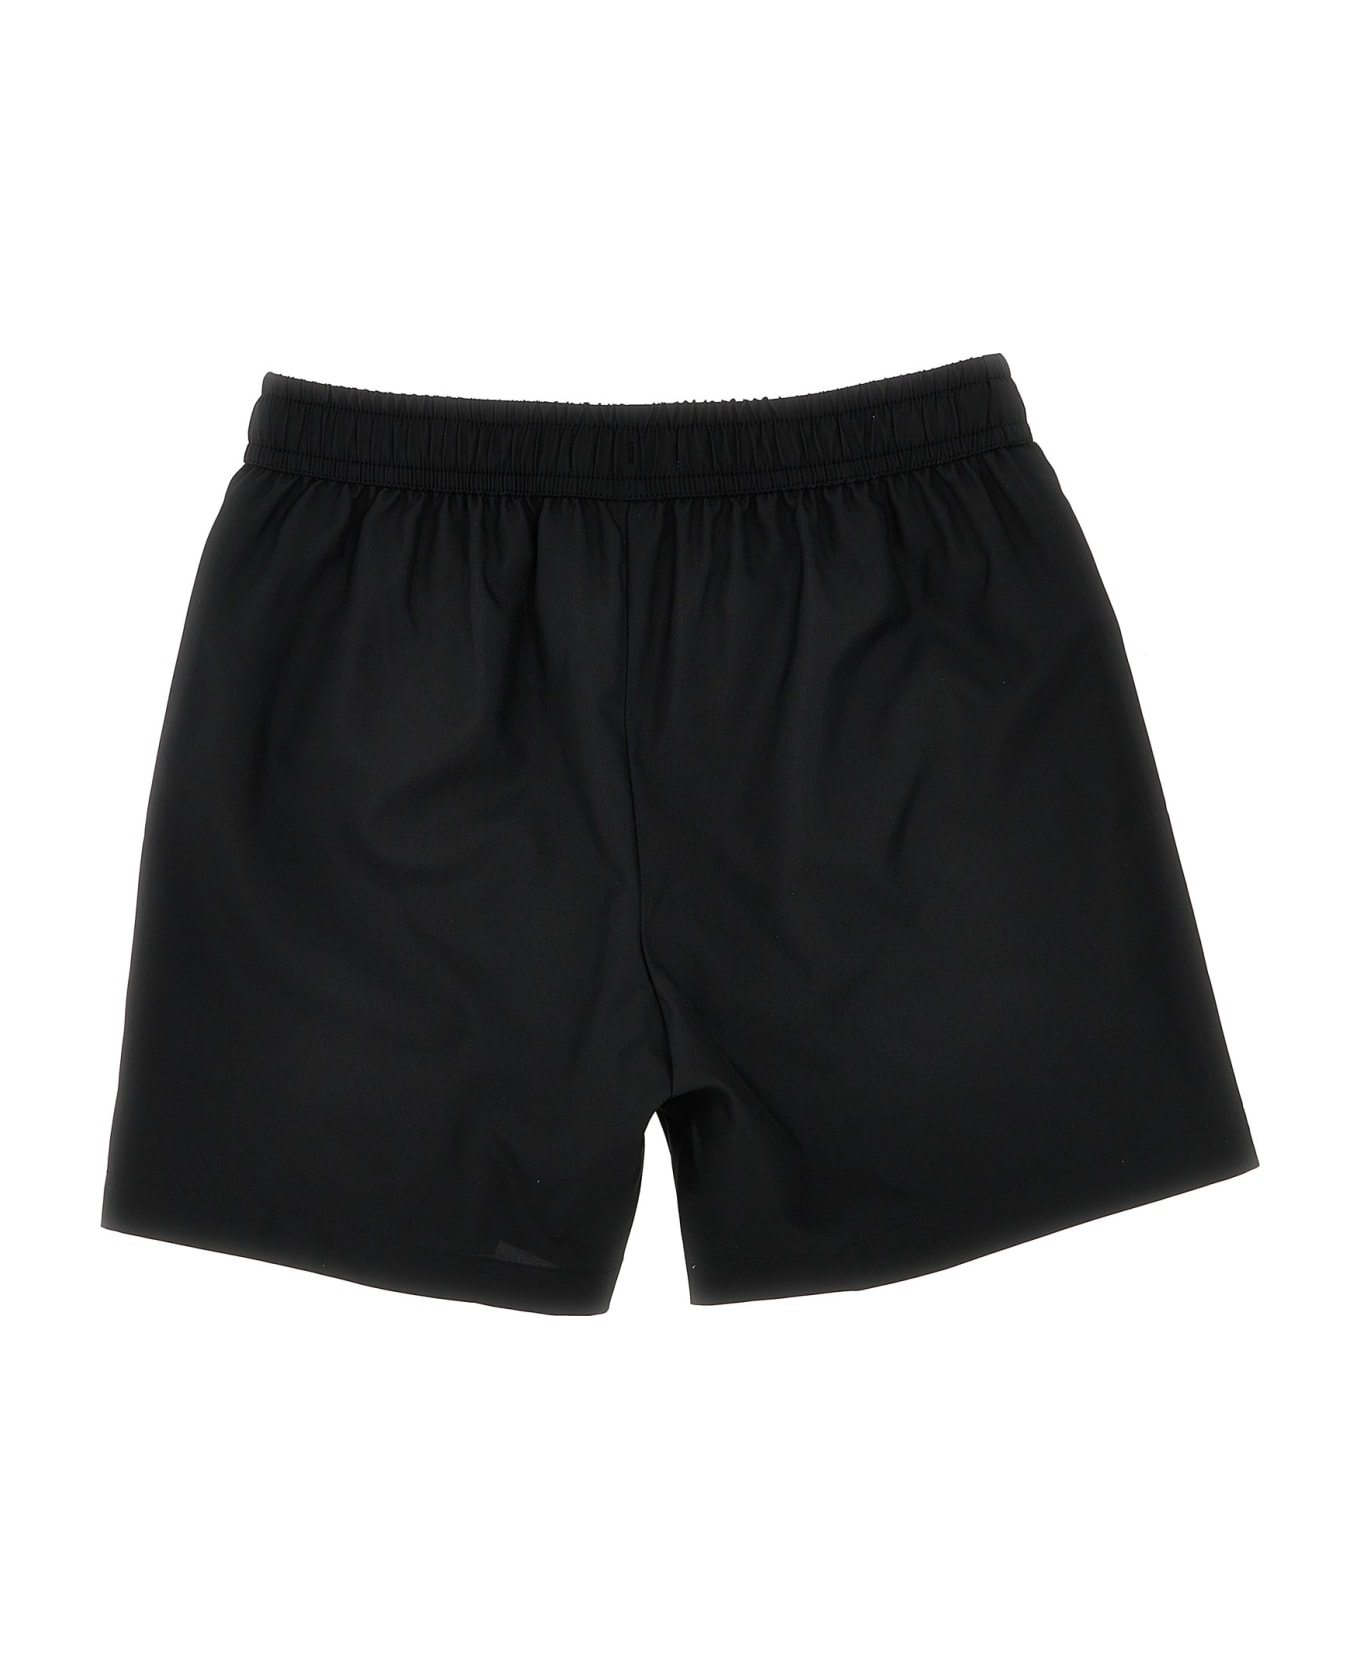 Moschino Logo Print Swim Shorts - Black   水着